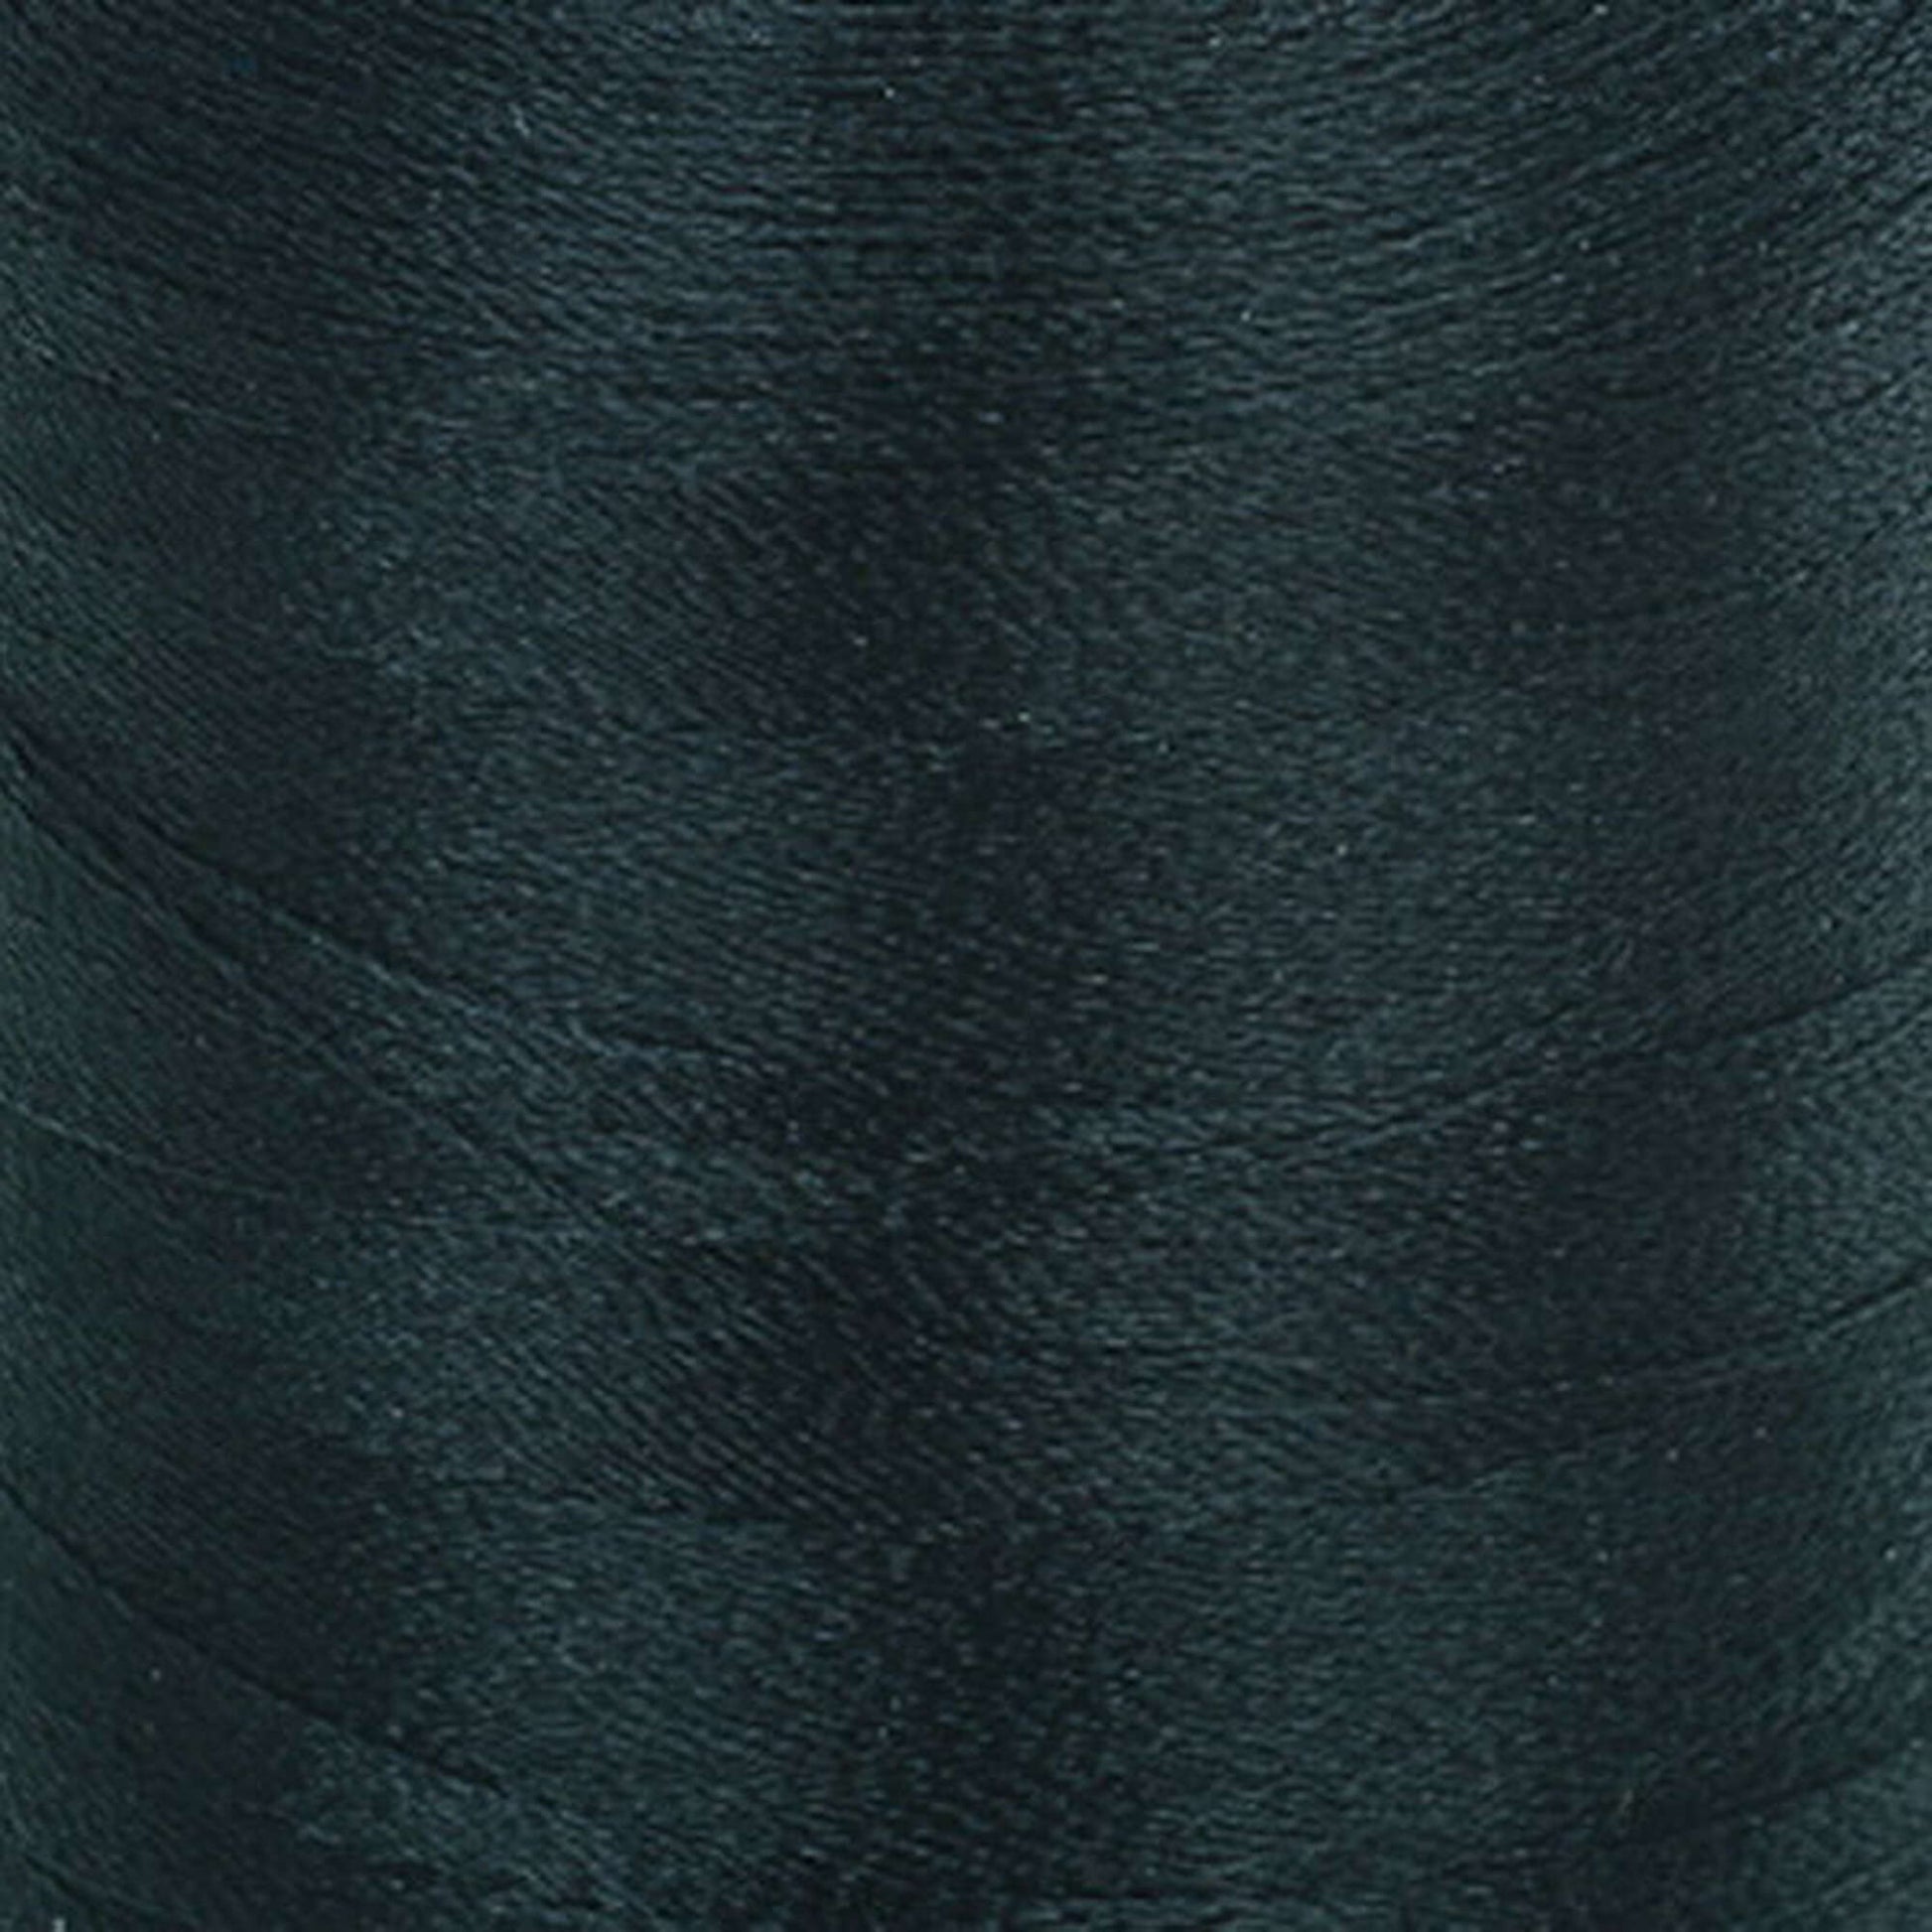 Coats & Clark Bobbin Thread (1800 Yards)